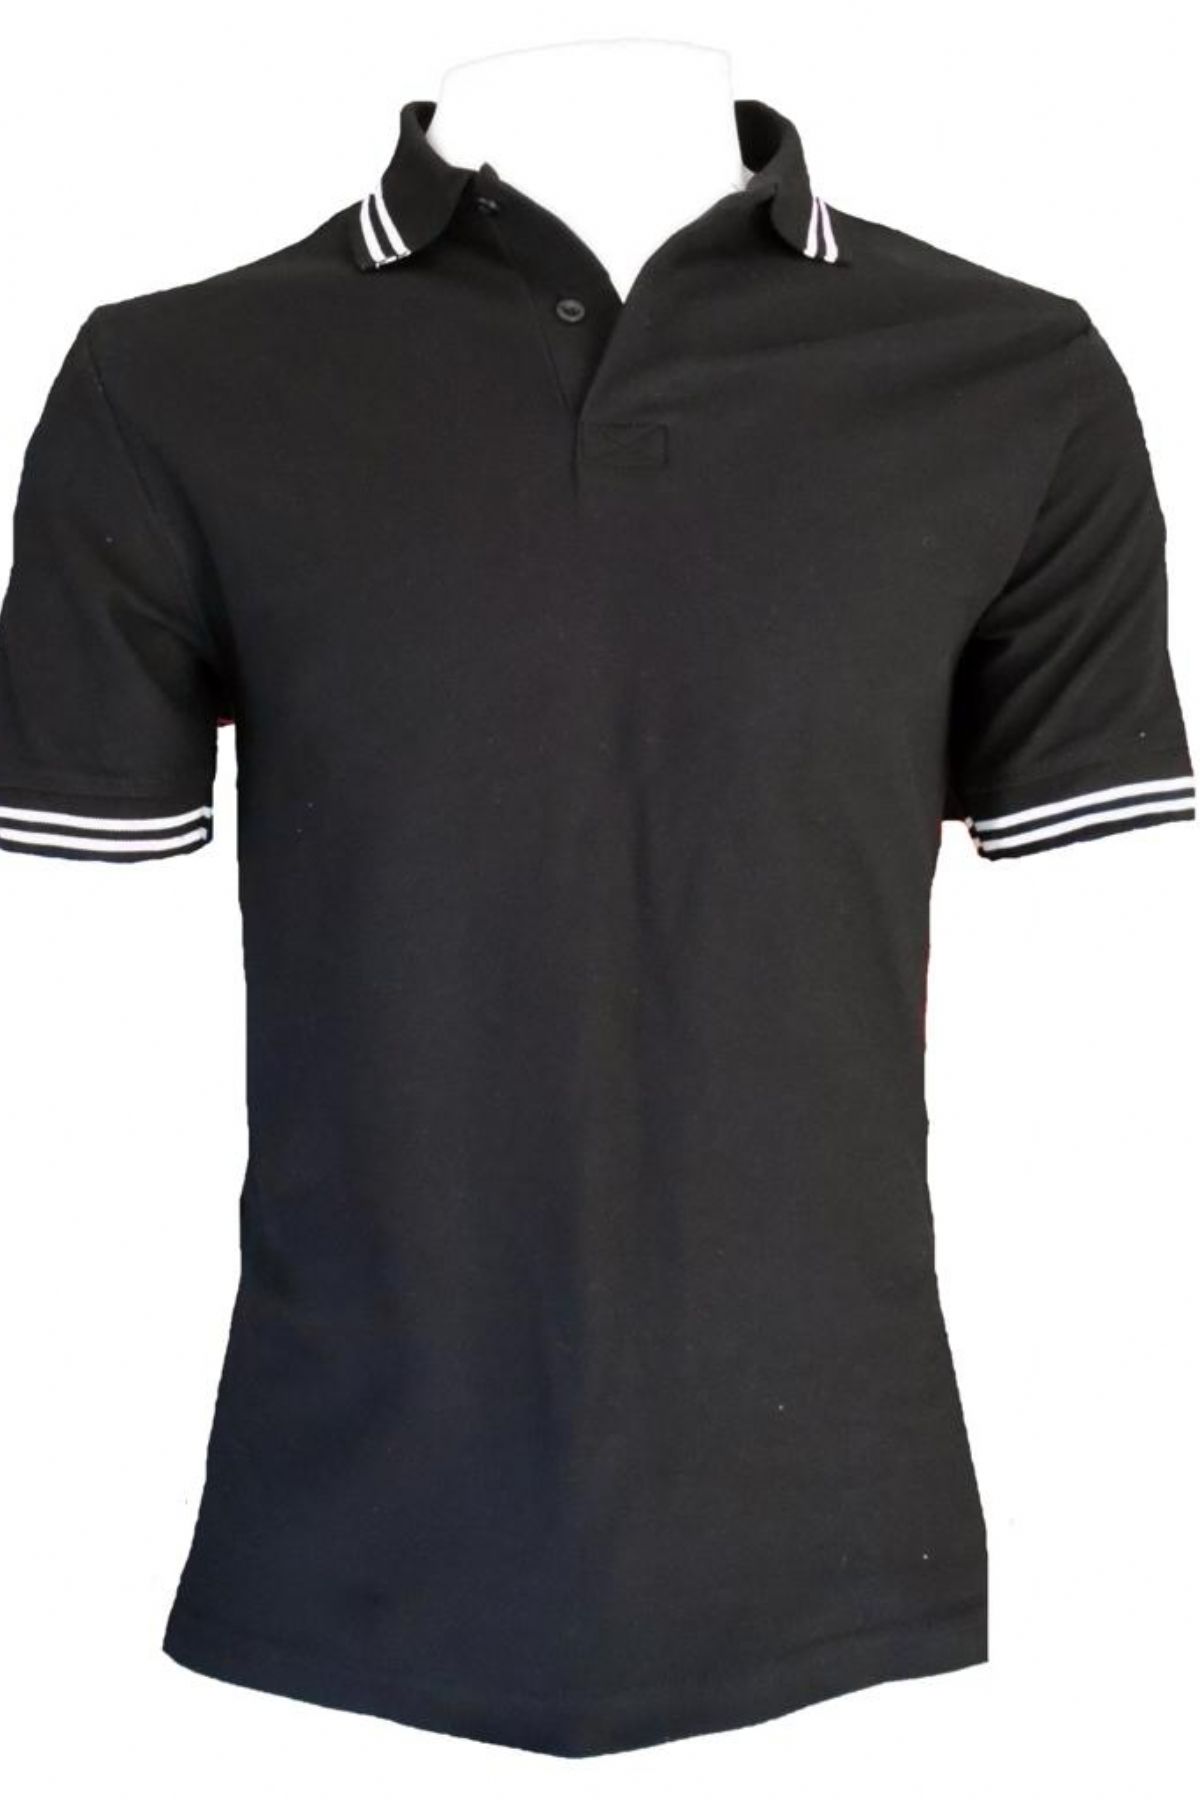 Lacoste T-shirt Siyah Renk Kol Bantlı